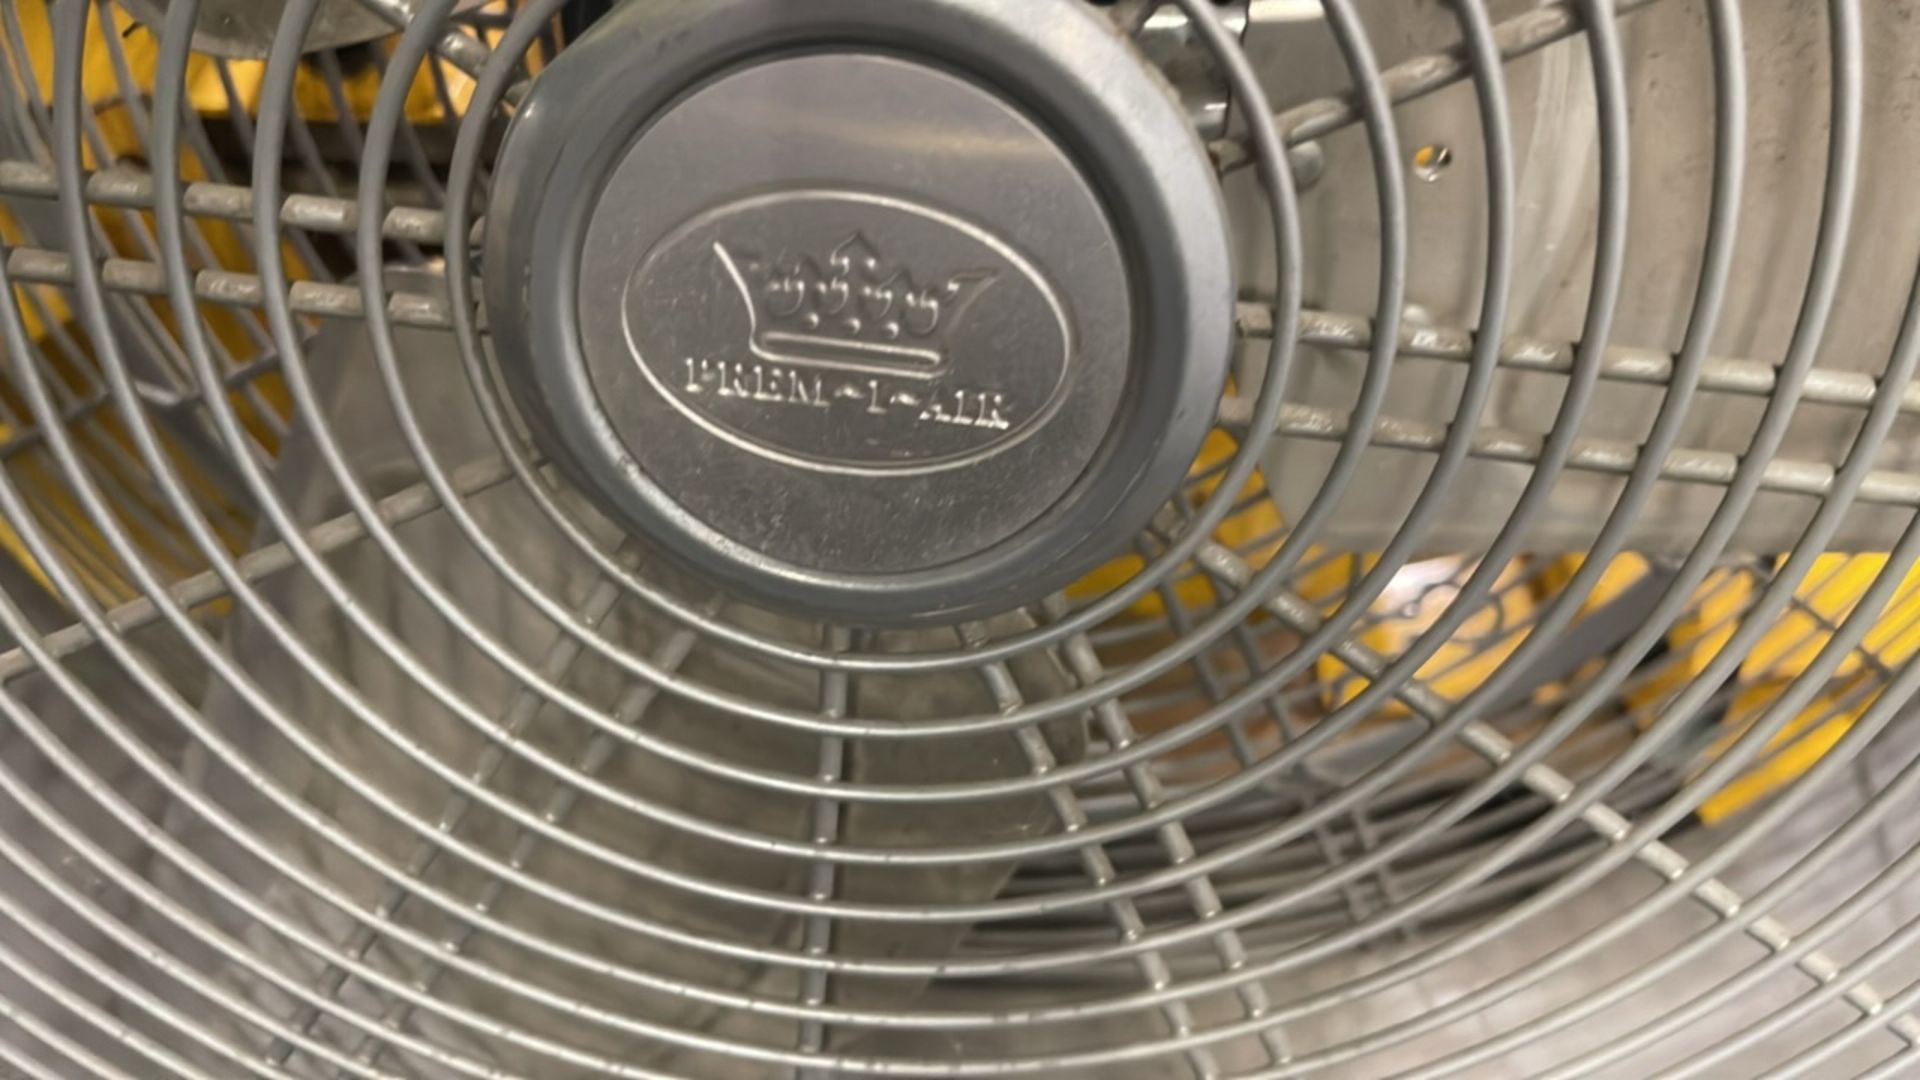 Prem-I-air Industrial Cooling Fan x 5 - Image 7 of 7